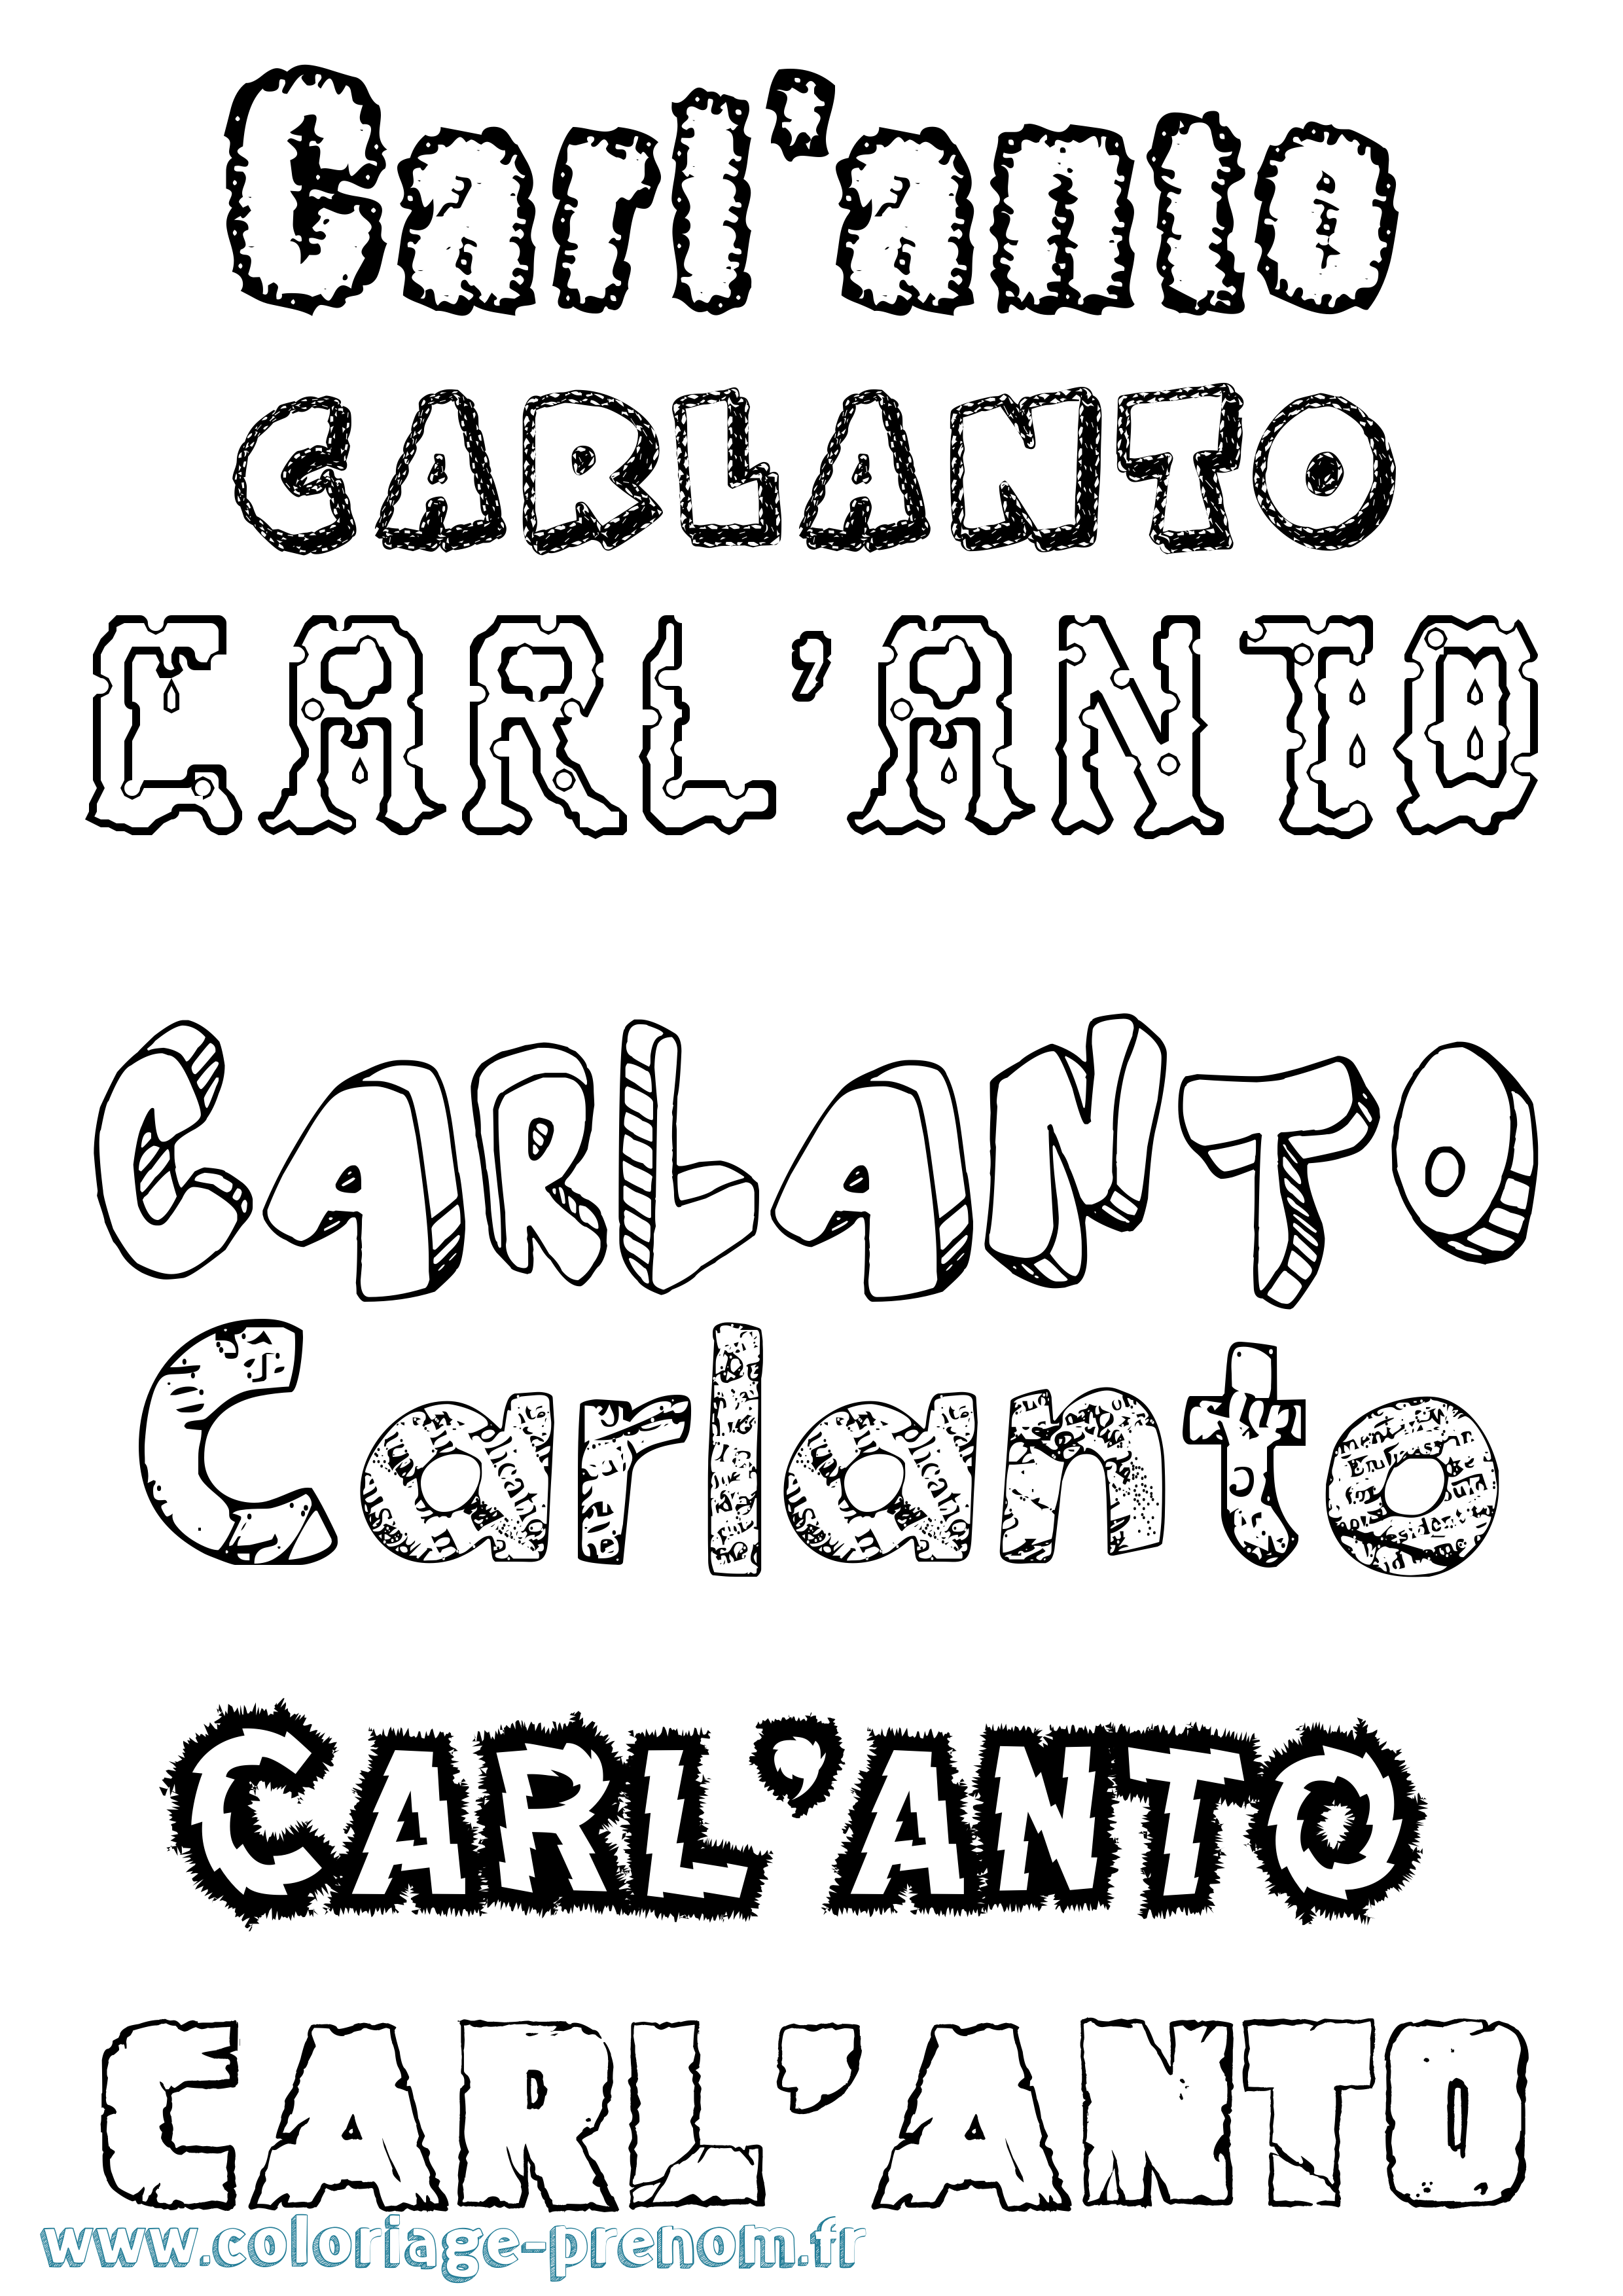 Coloriage prénom Carl'Anto Destructuré